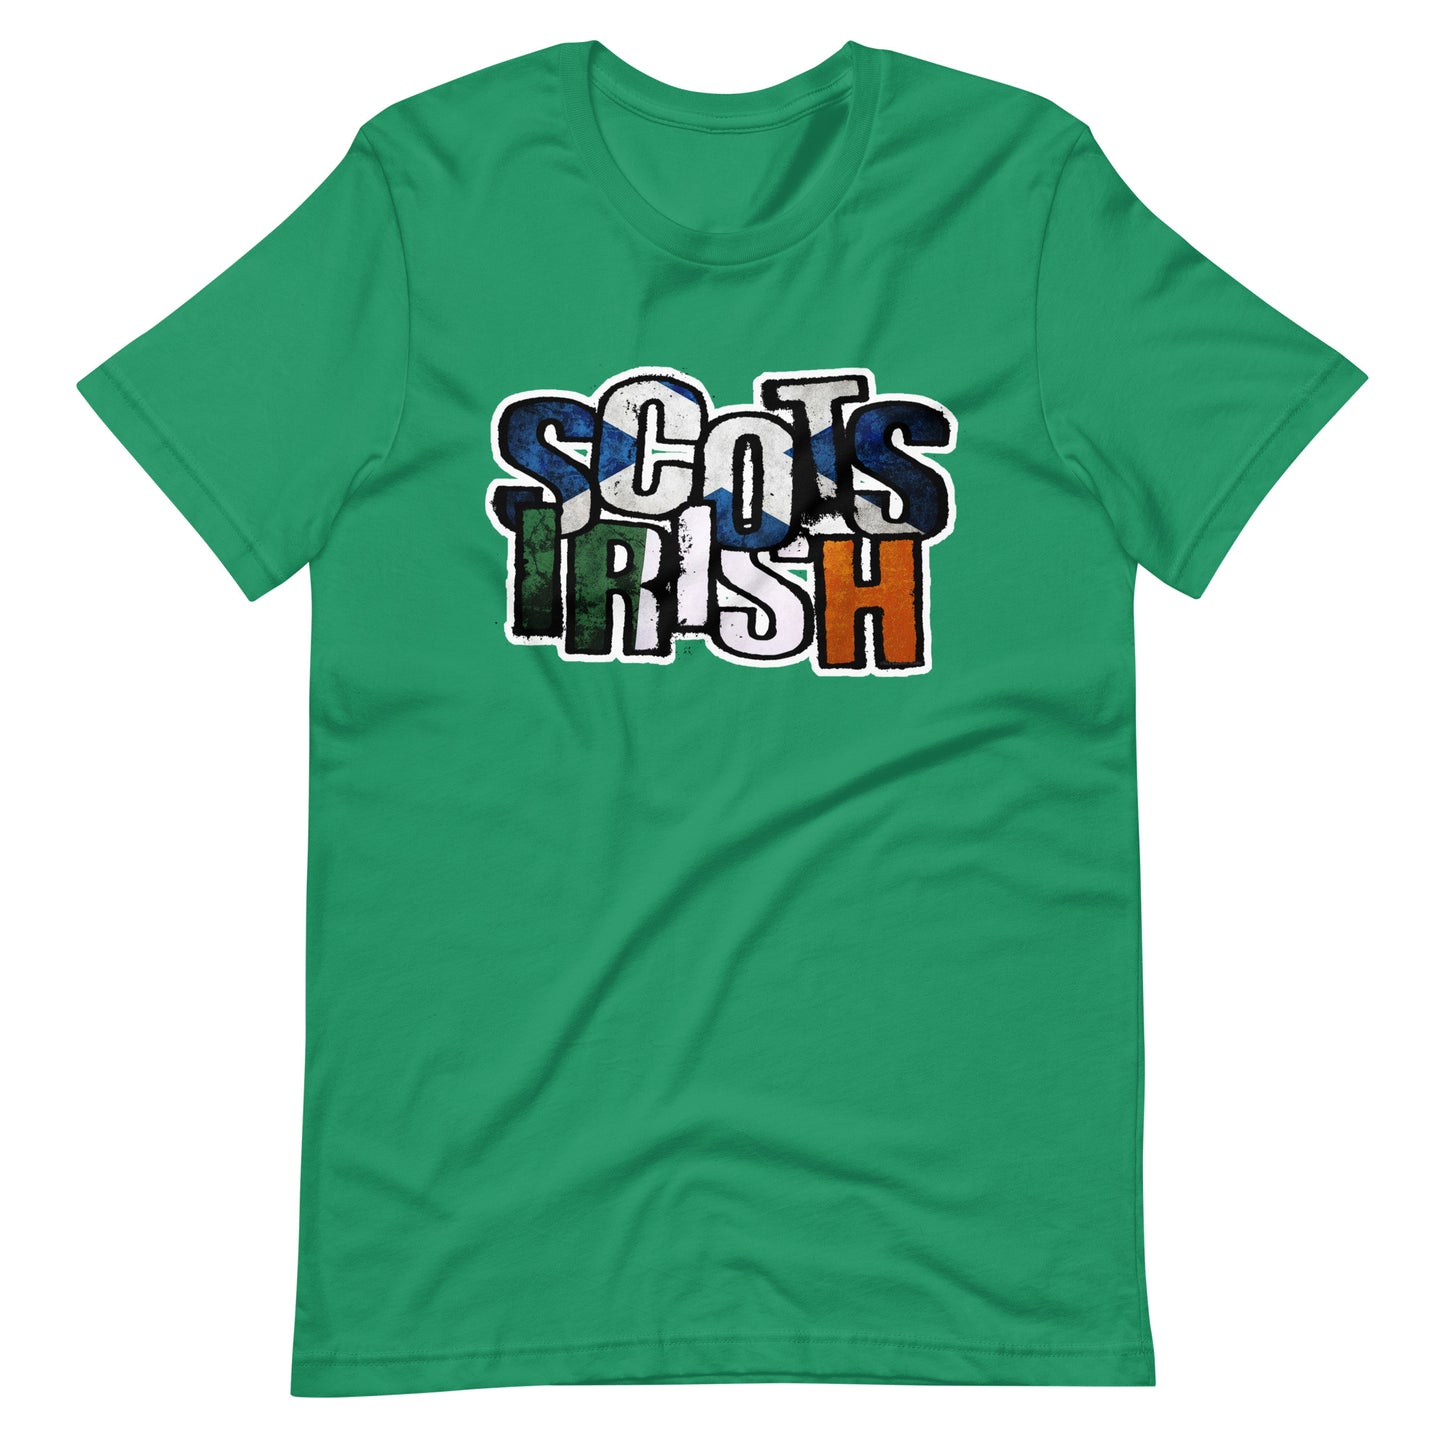 Scots Irish T-shirt